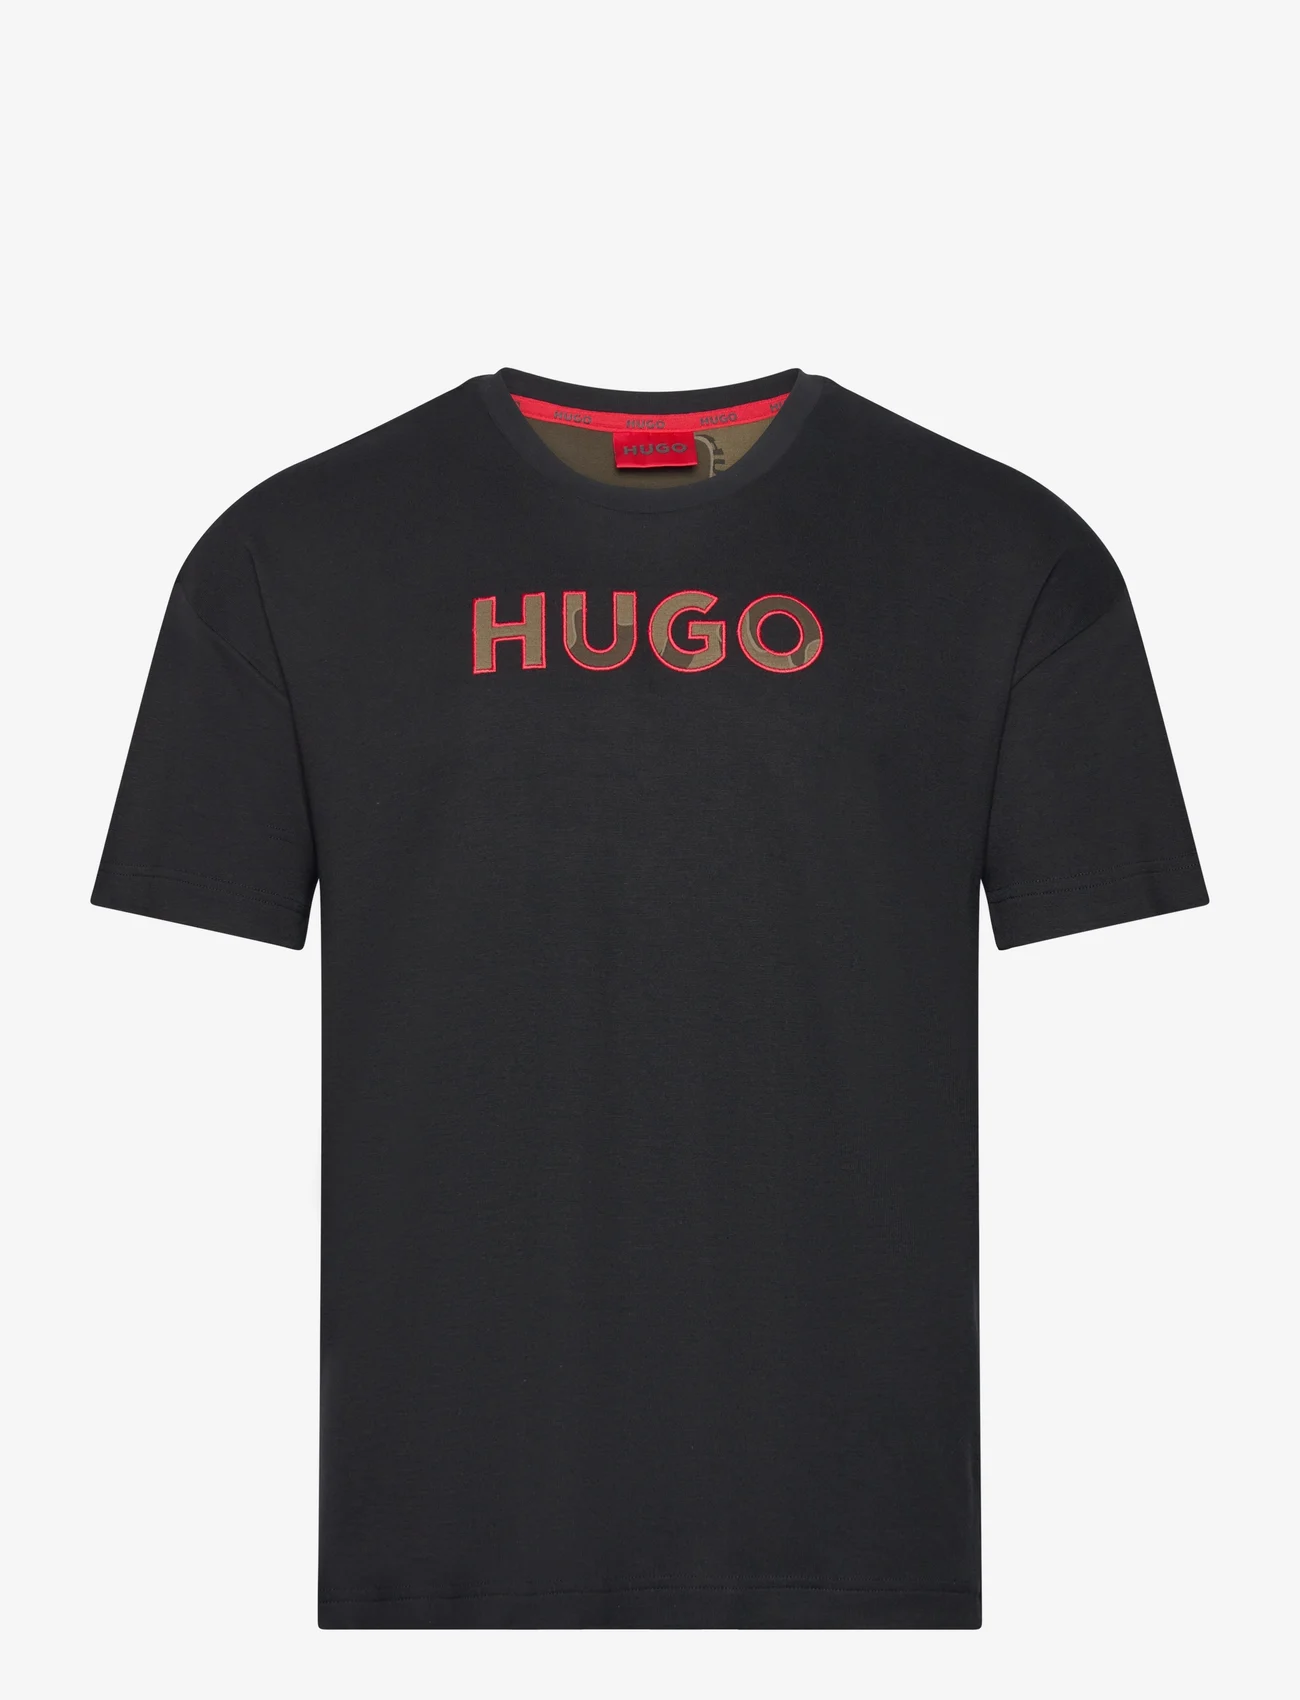 HUGO - Camo T-Shirt - short-sleeved t-shirts - black - 0